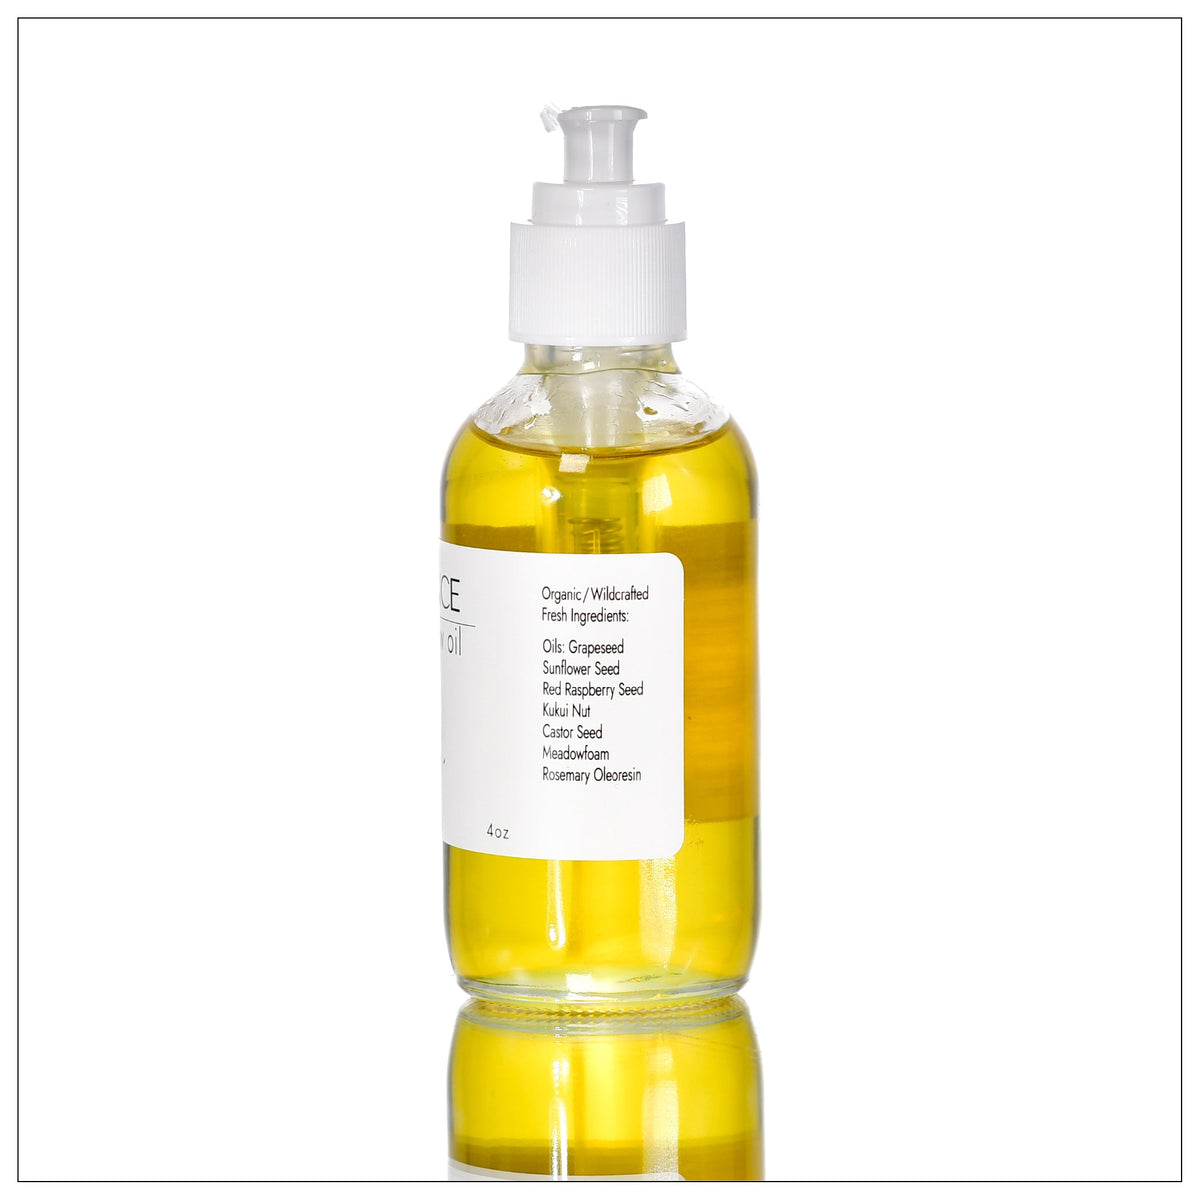 Cleanse &amp; Glow Oil. 100% Plant Based. Organic. Clean. - Luminance Skincare